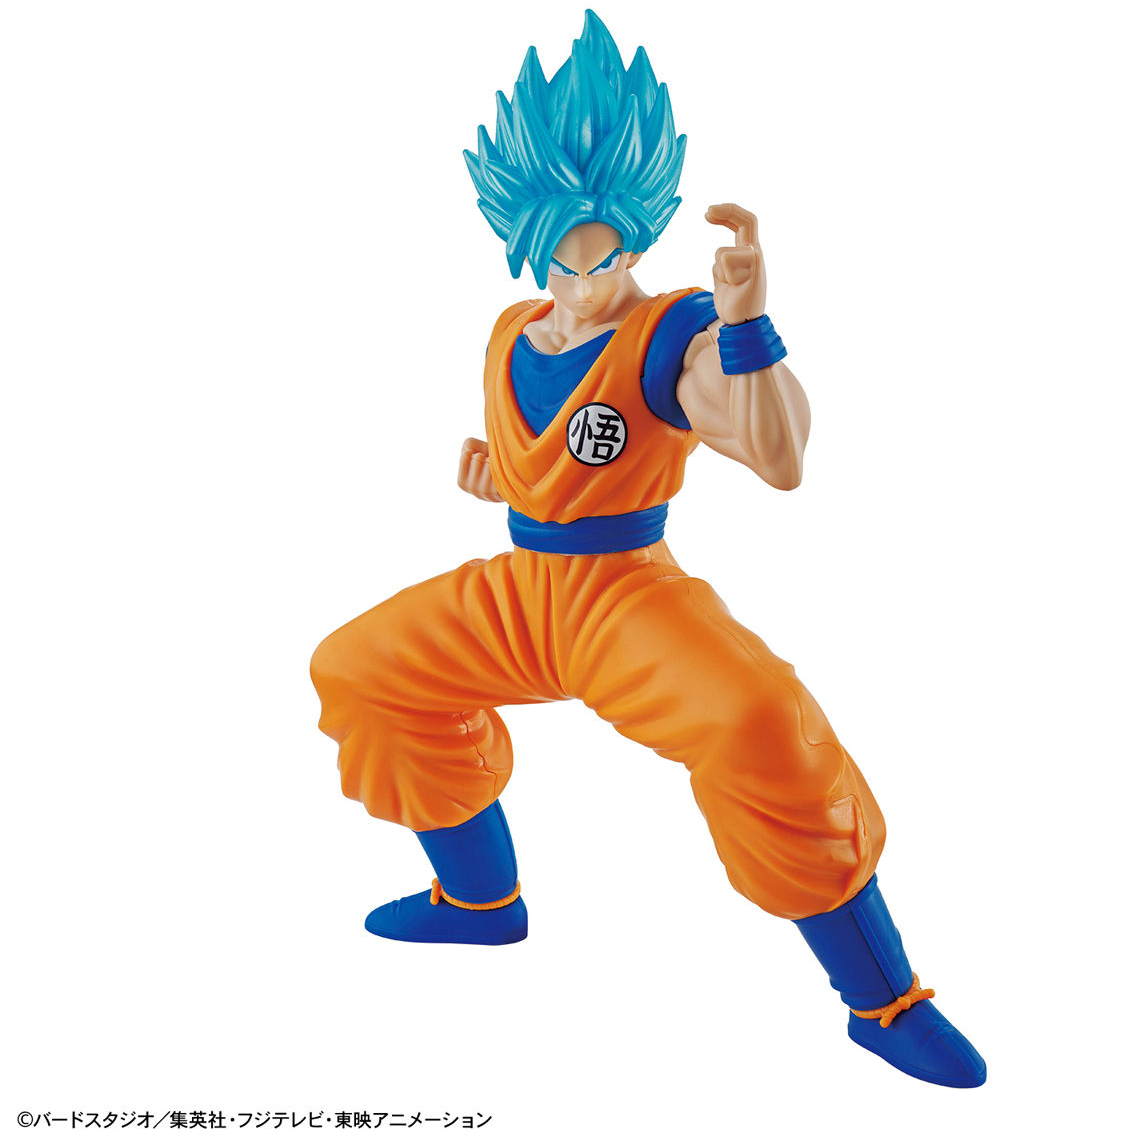 Son Goku Super Saiyan God Super Saiyan Blue by herconaryangga15 on